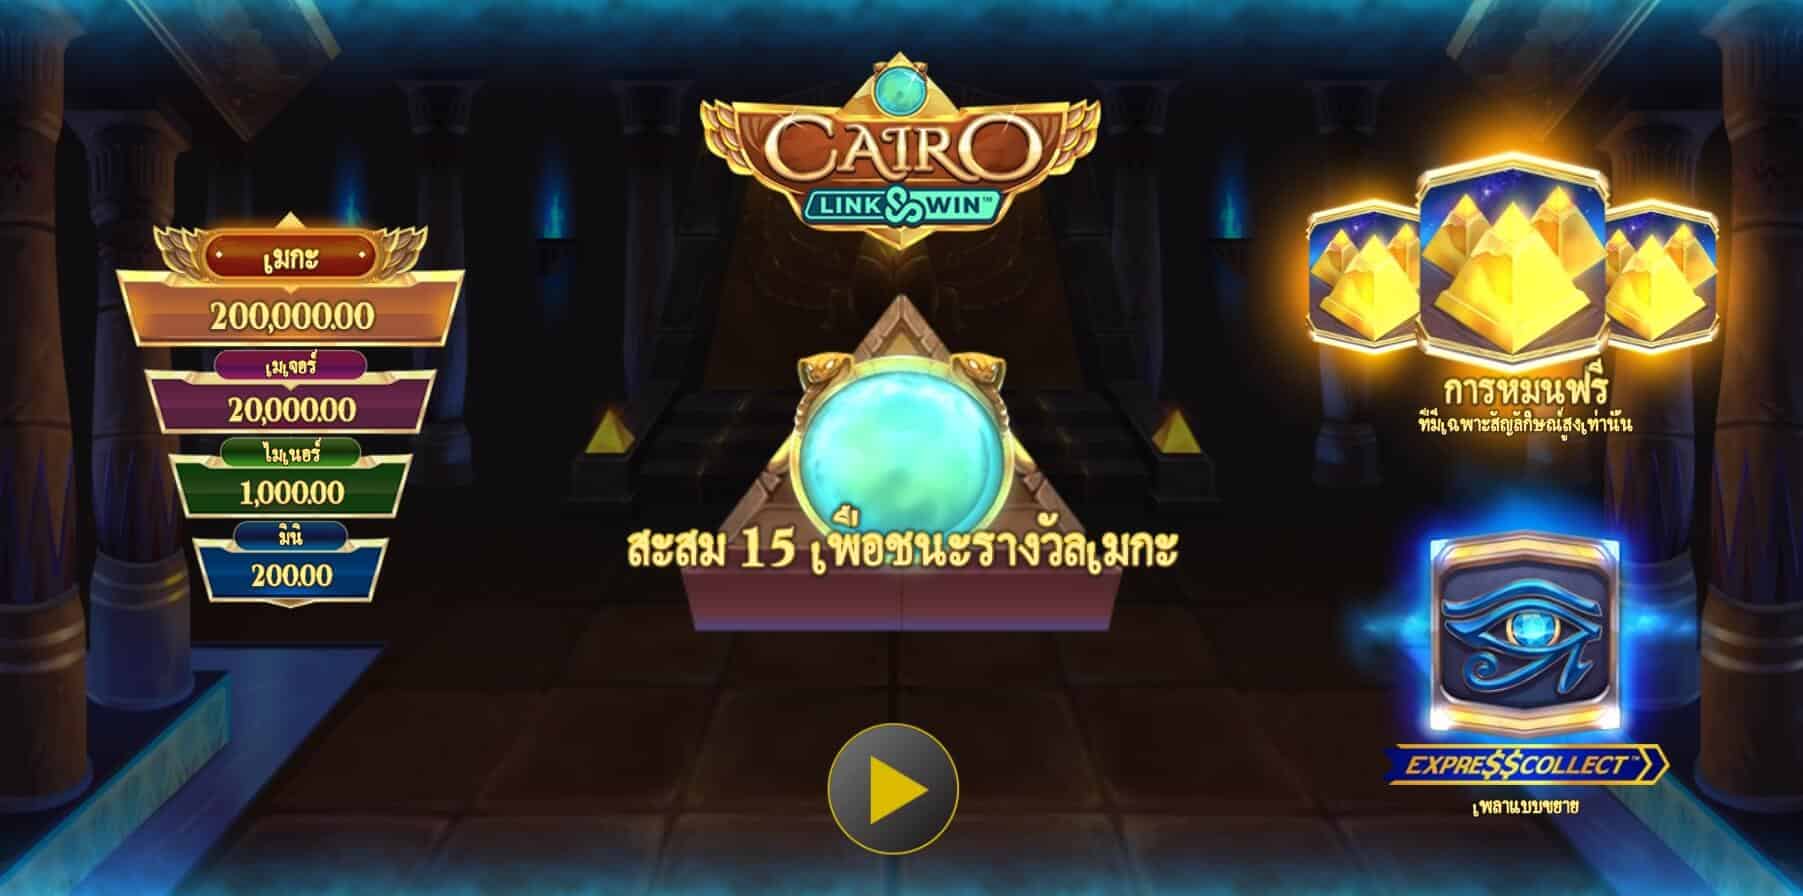 Cairo Link & Win Microgaming สล็อต xo